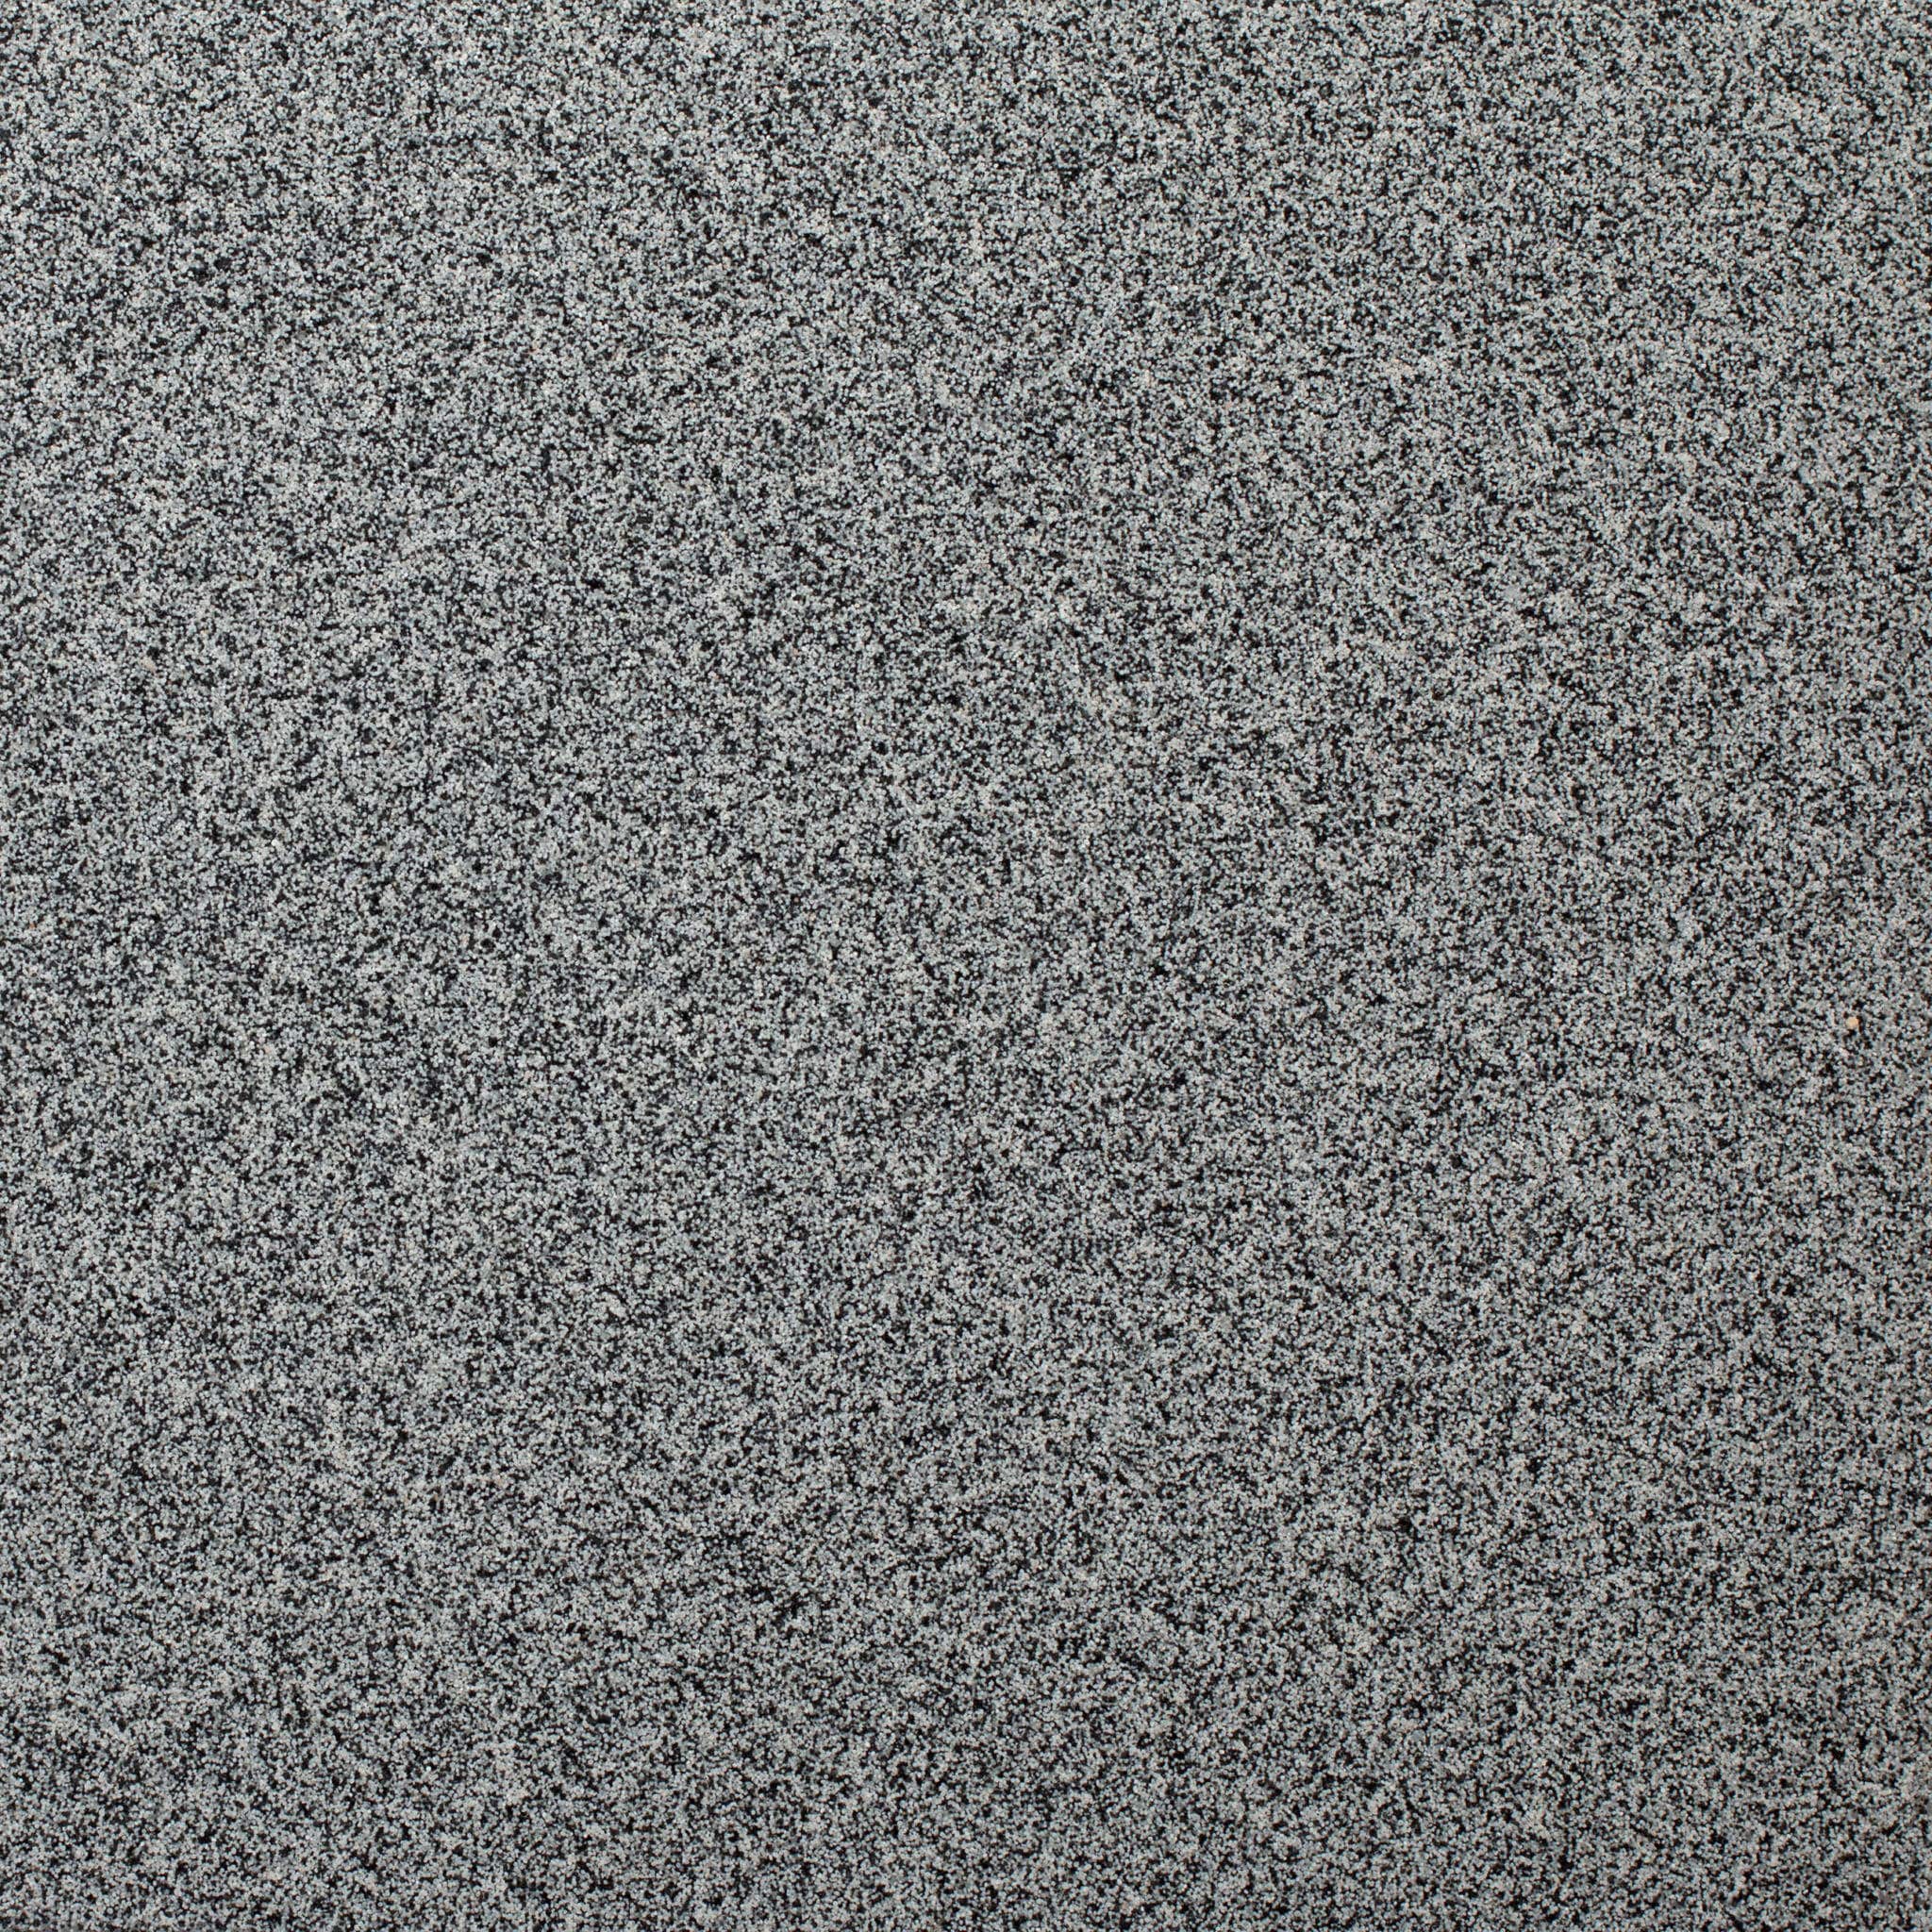 Graphite Grey Quartzsite SR309